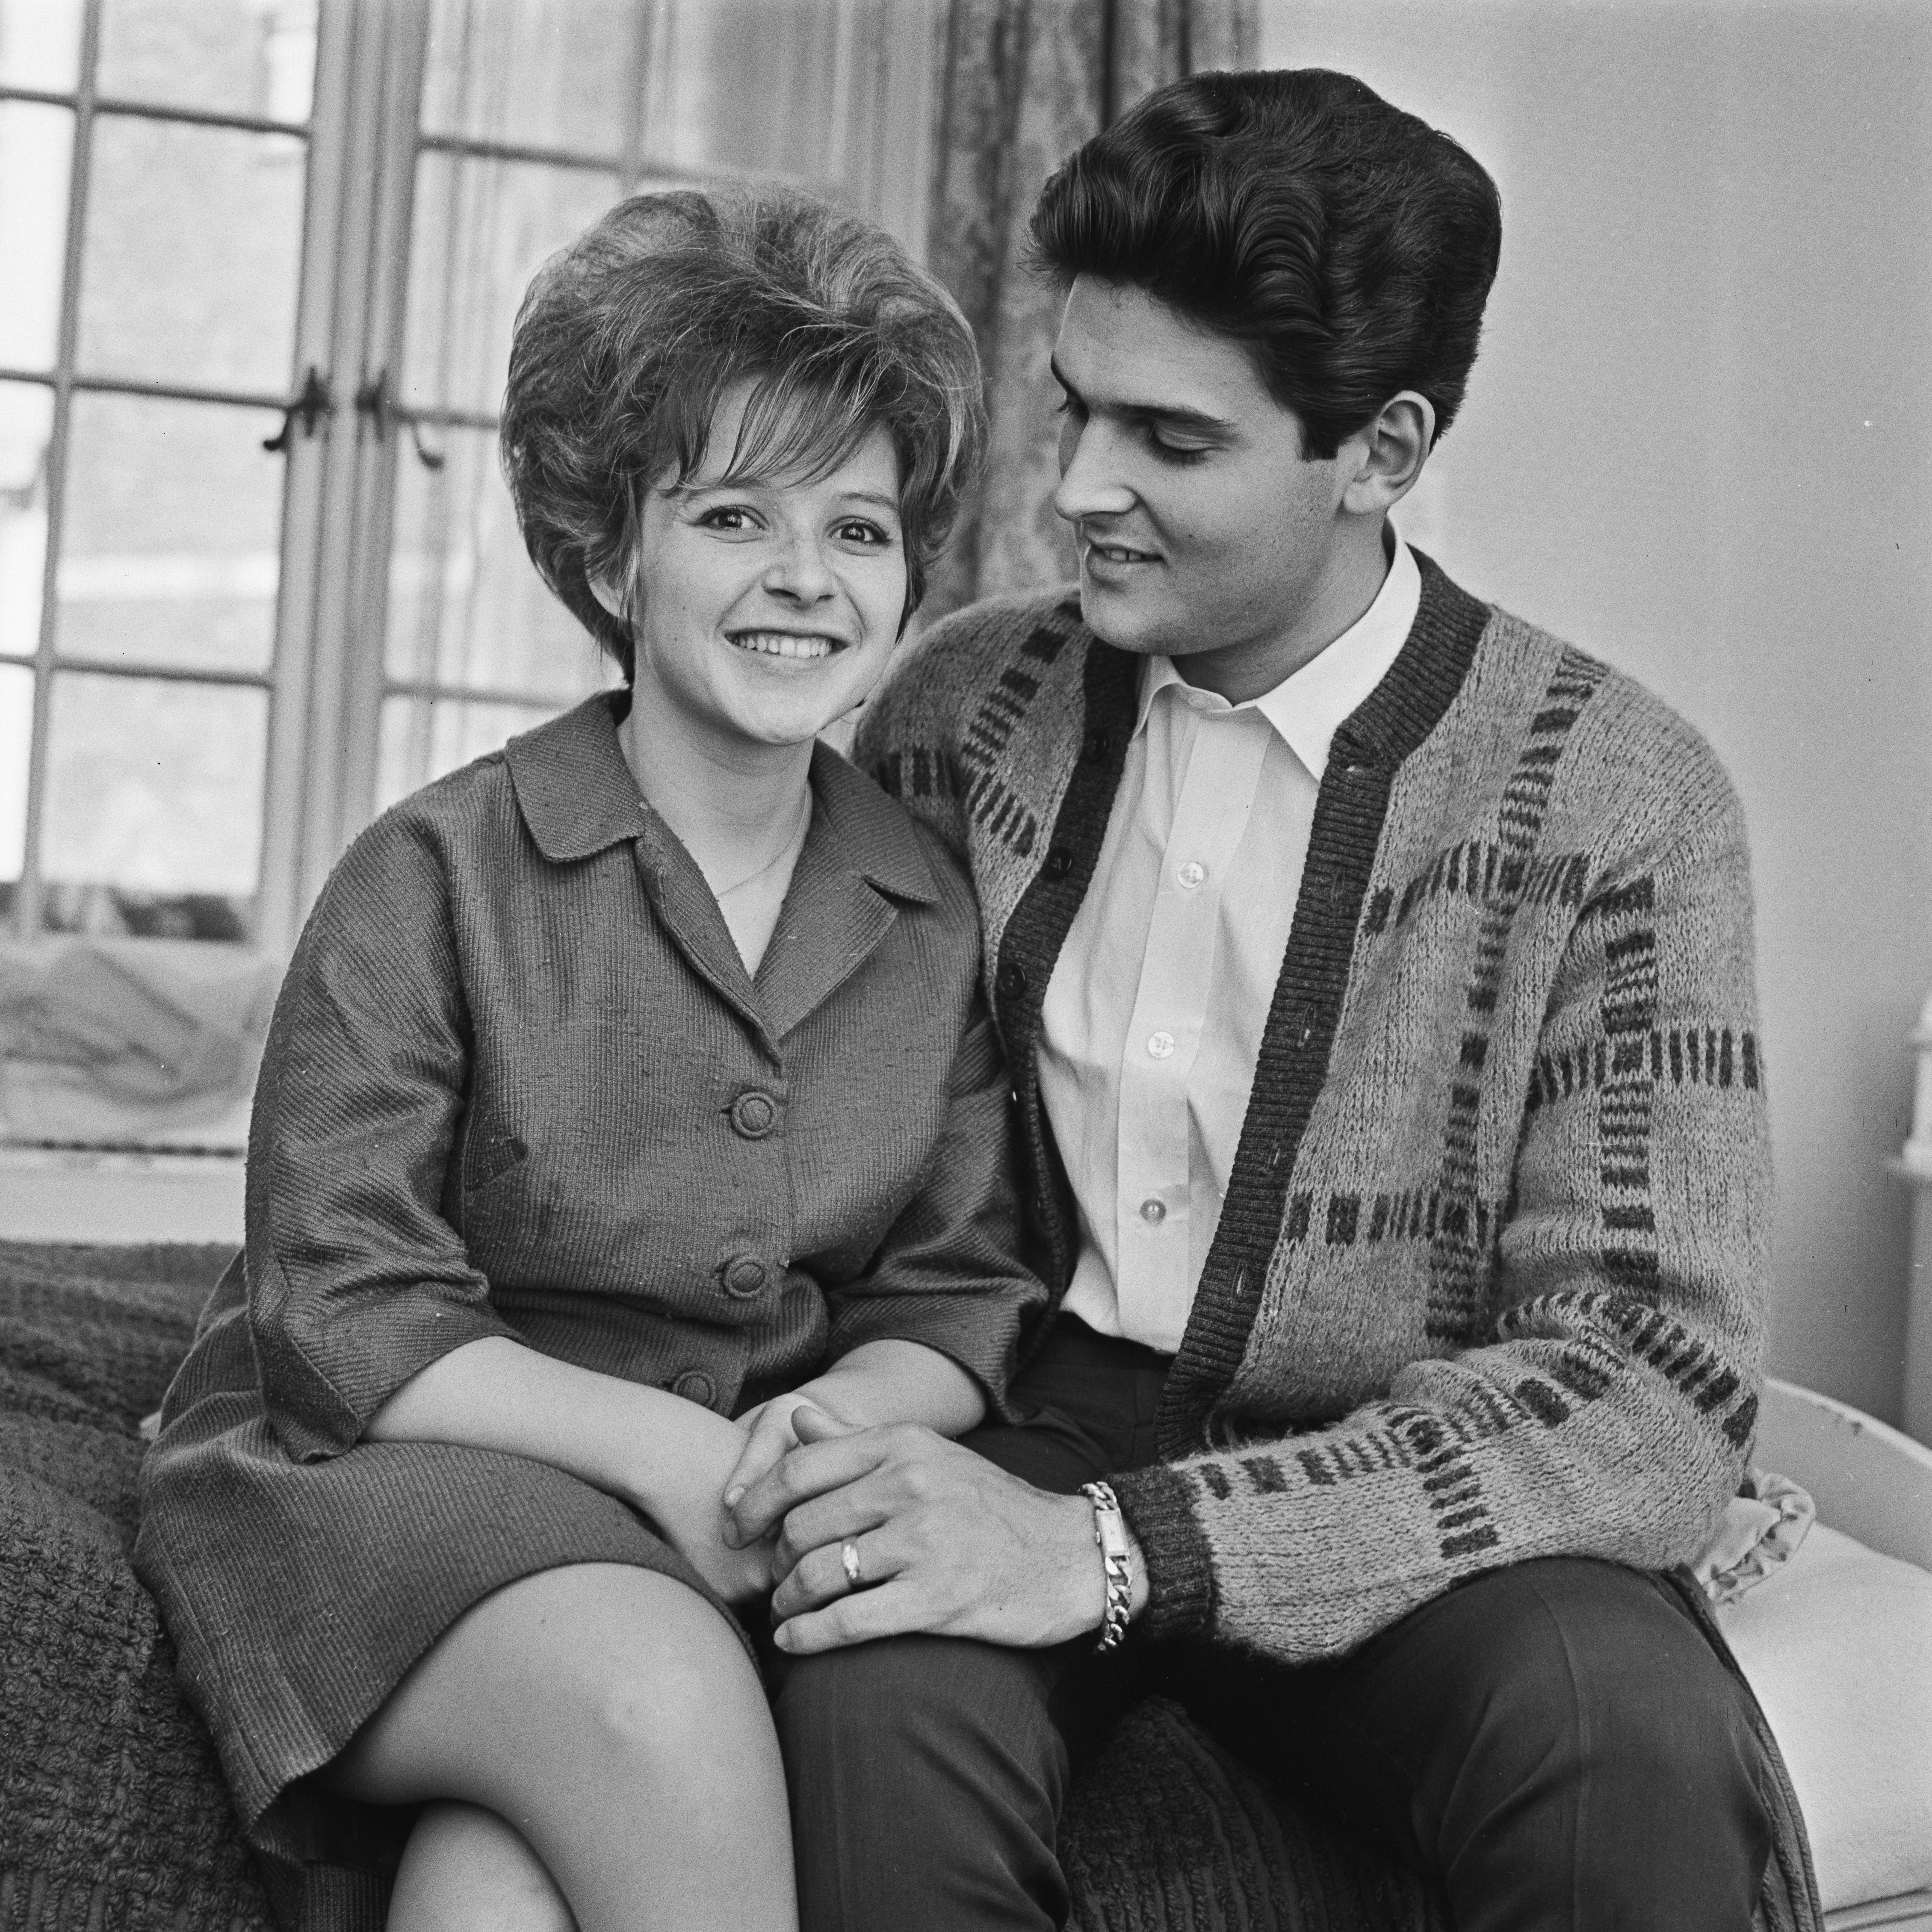 Brenda Lee with her husband Ronnie Shacklett, 1964